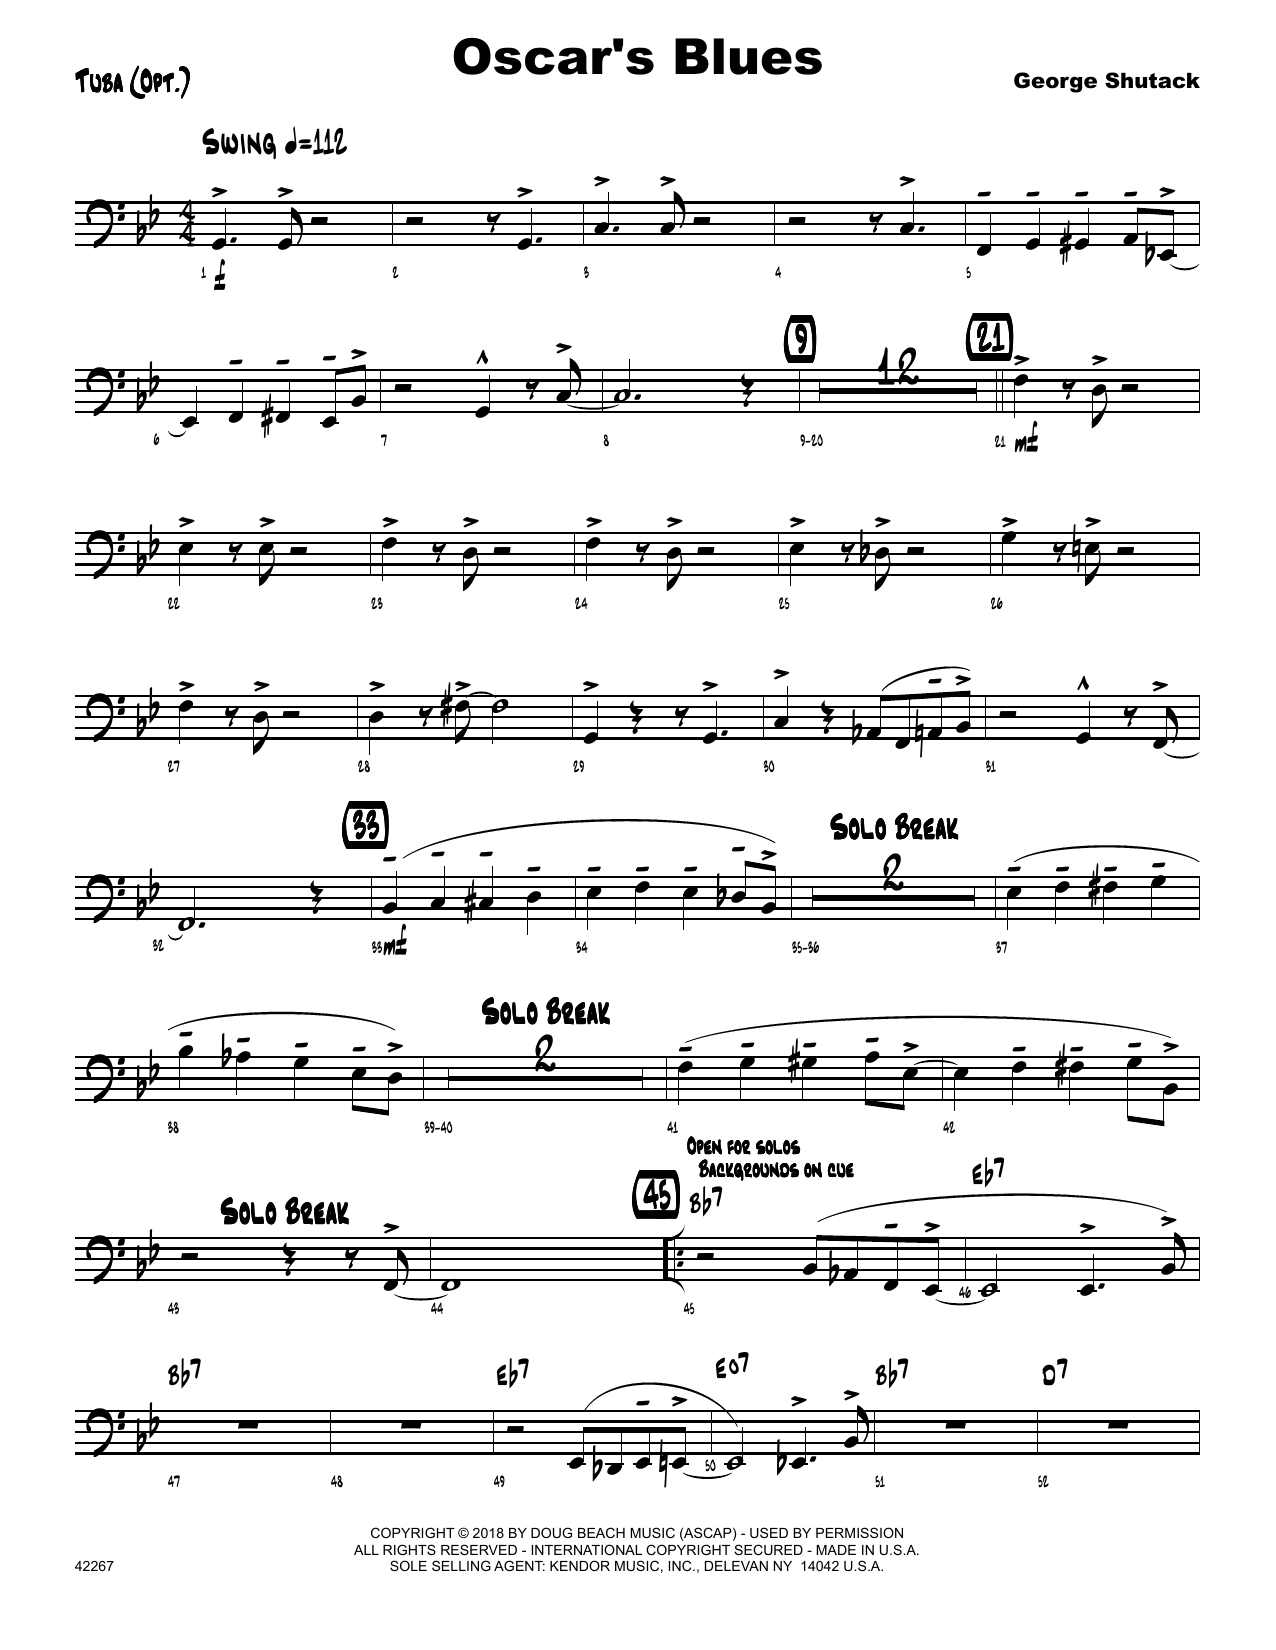 Download George Shutack Oscar's Blues - Tuba Sheet Music